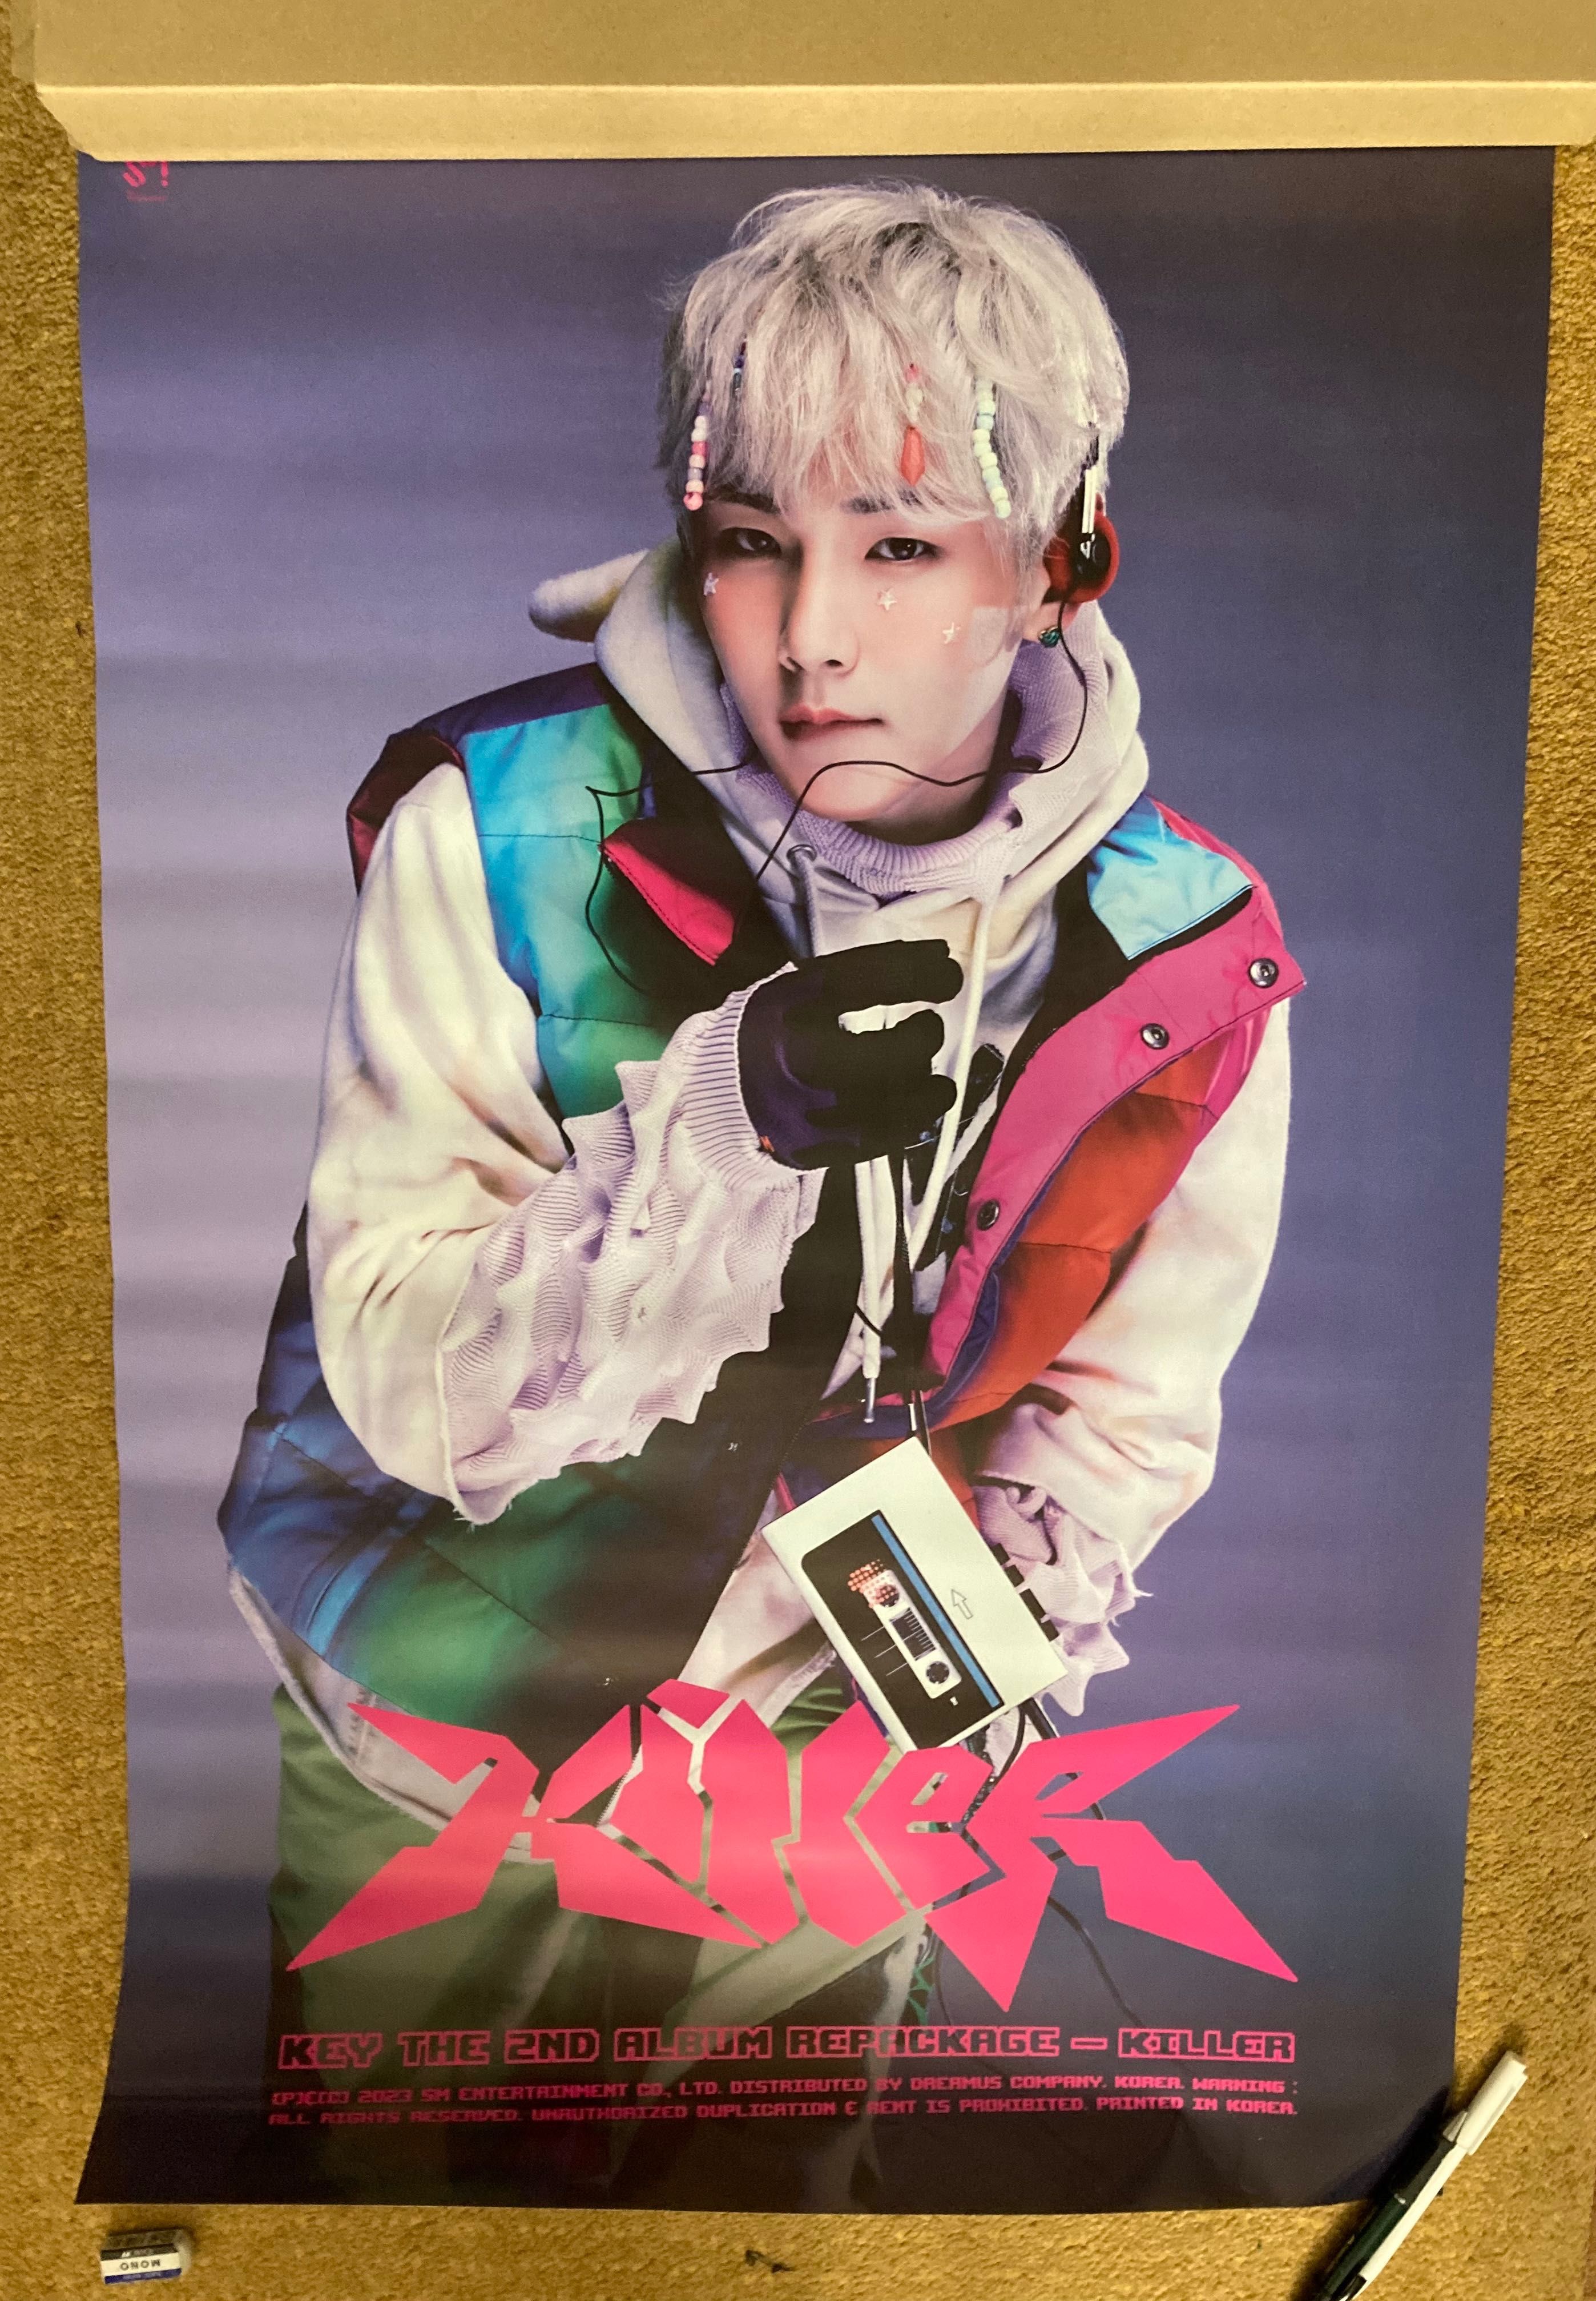 KEY (SHINee) - plakat do albumu „Killer”